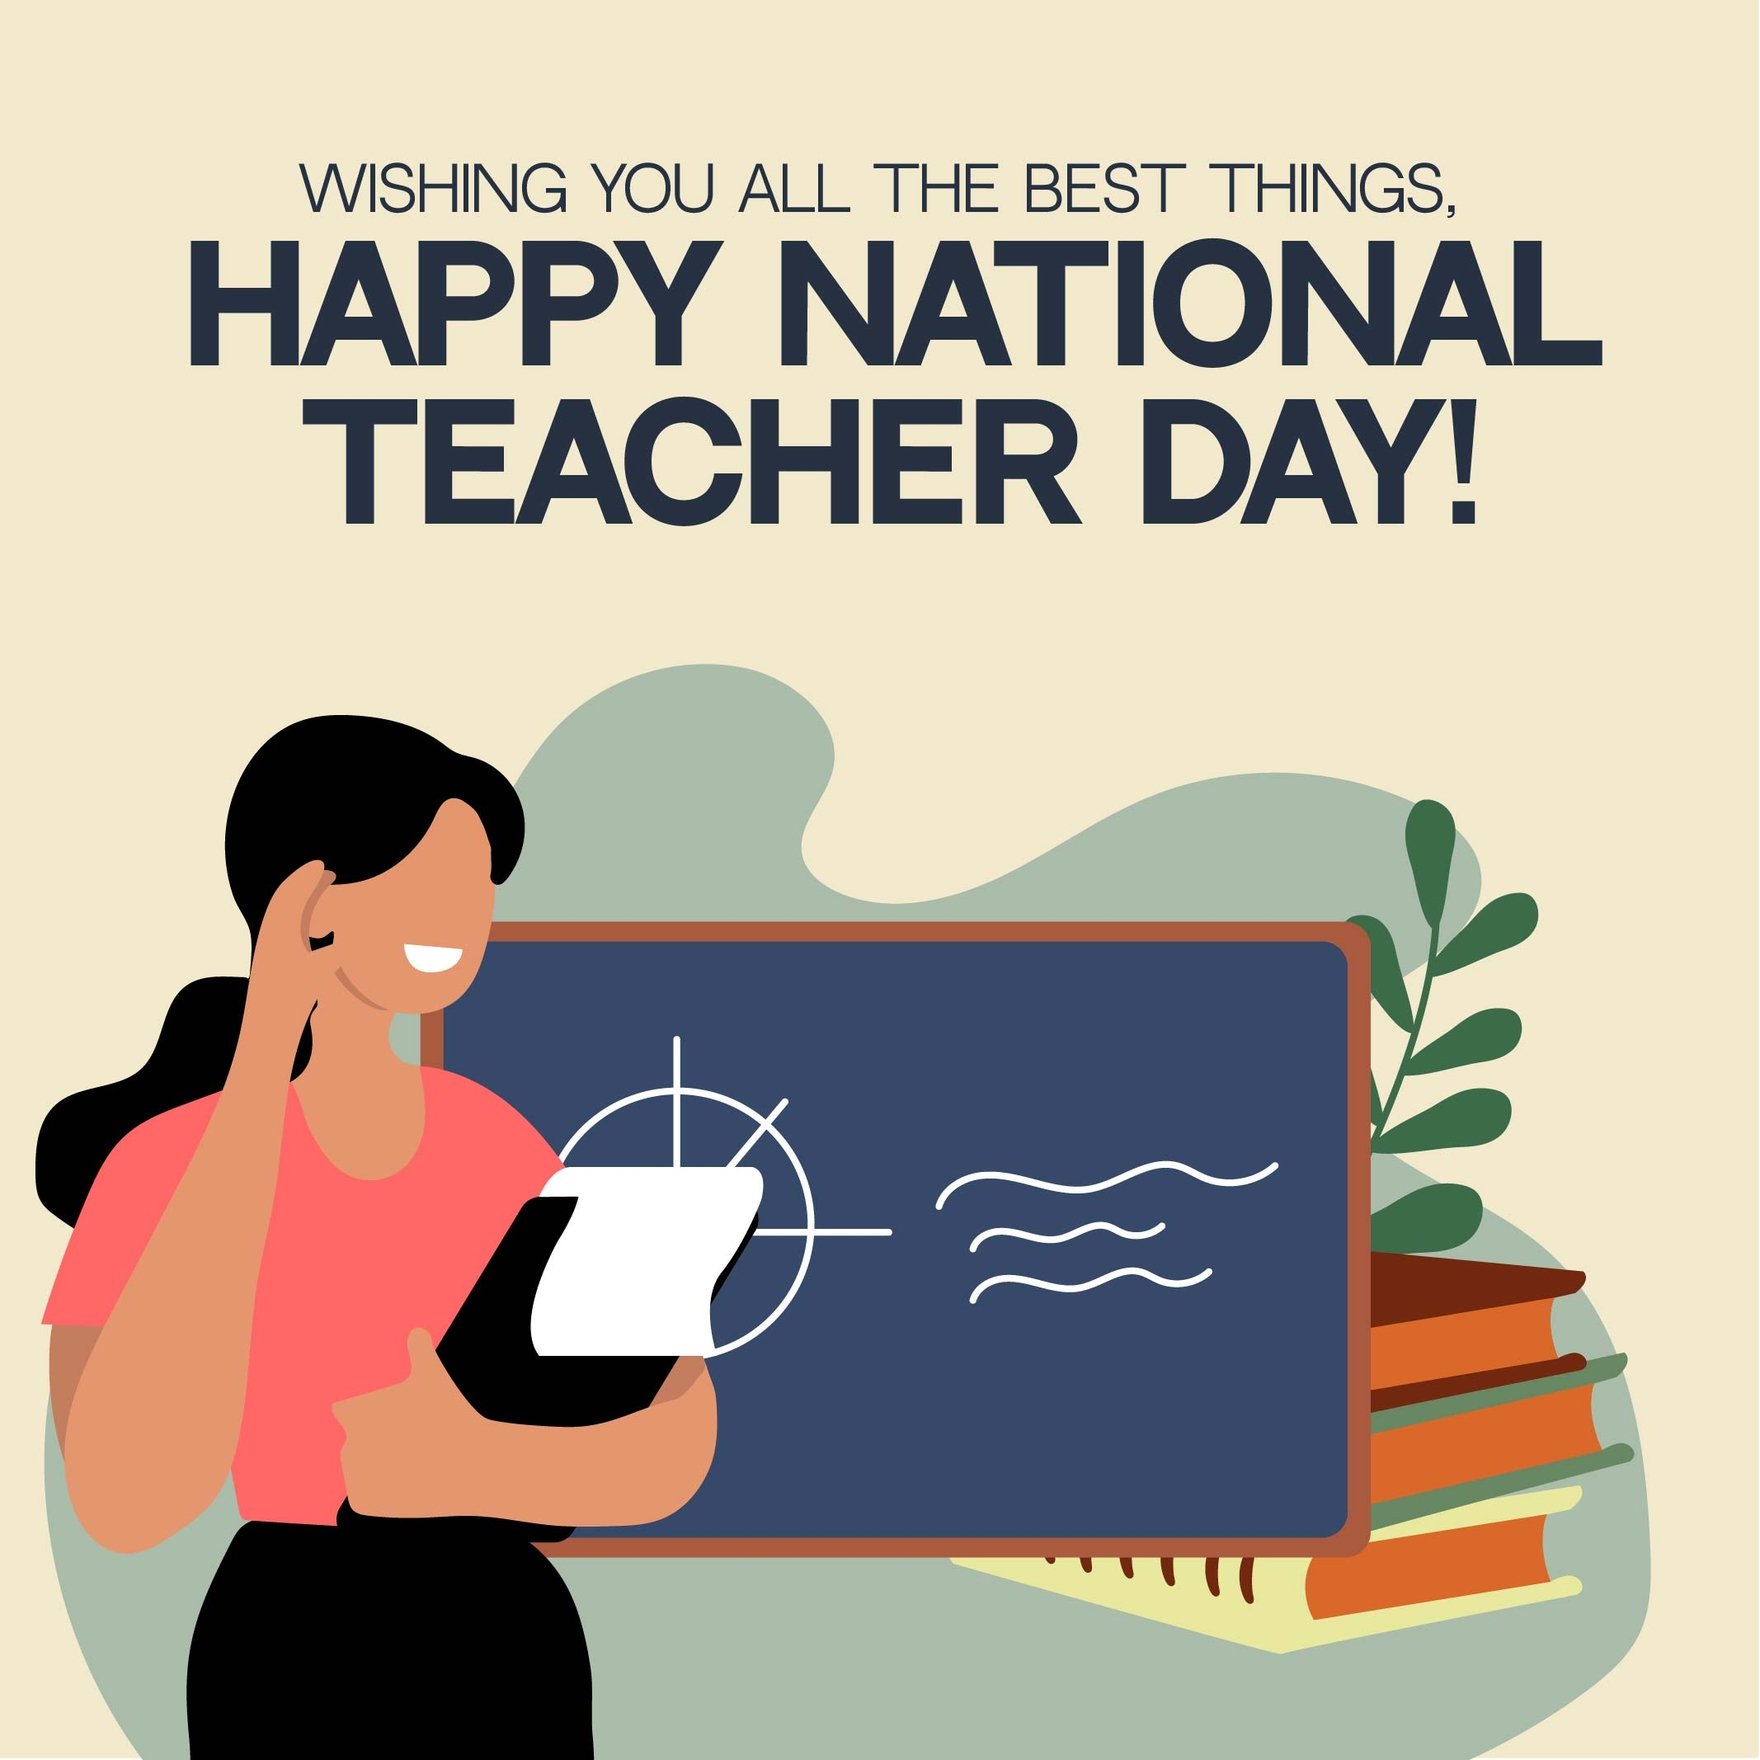 National Teacher Day Wishes Vector in EPS, Illustrator, JPG, PNG, SVG